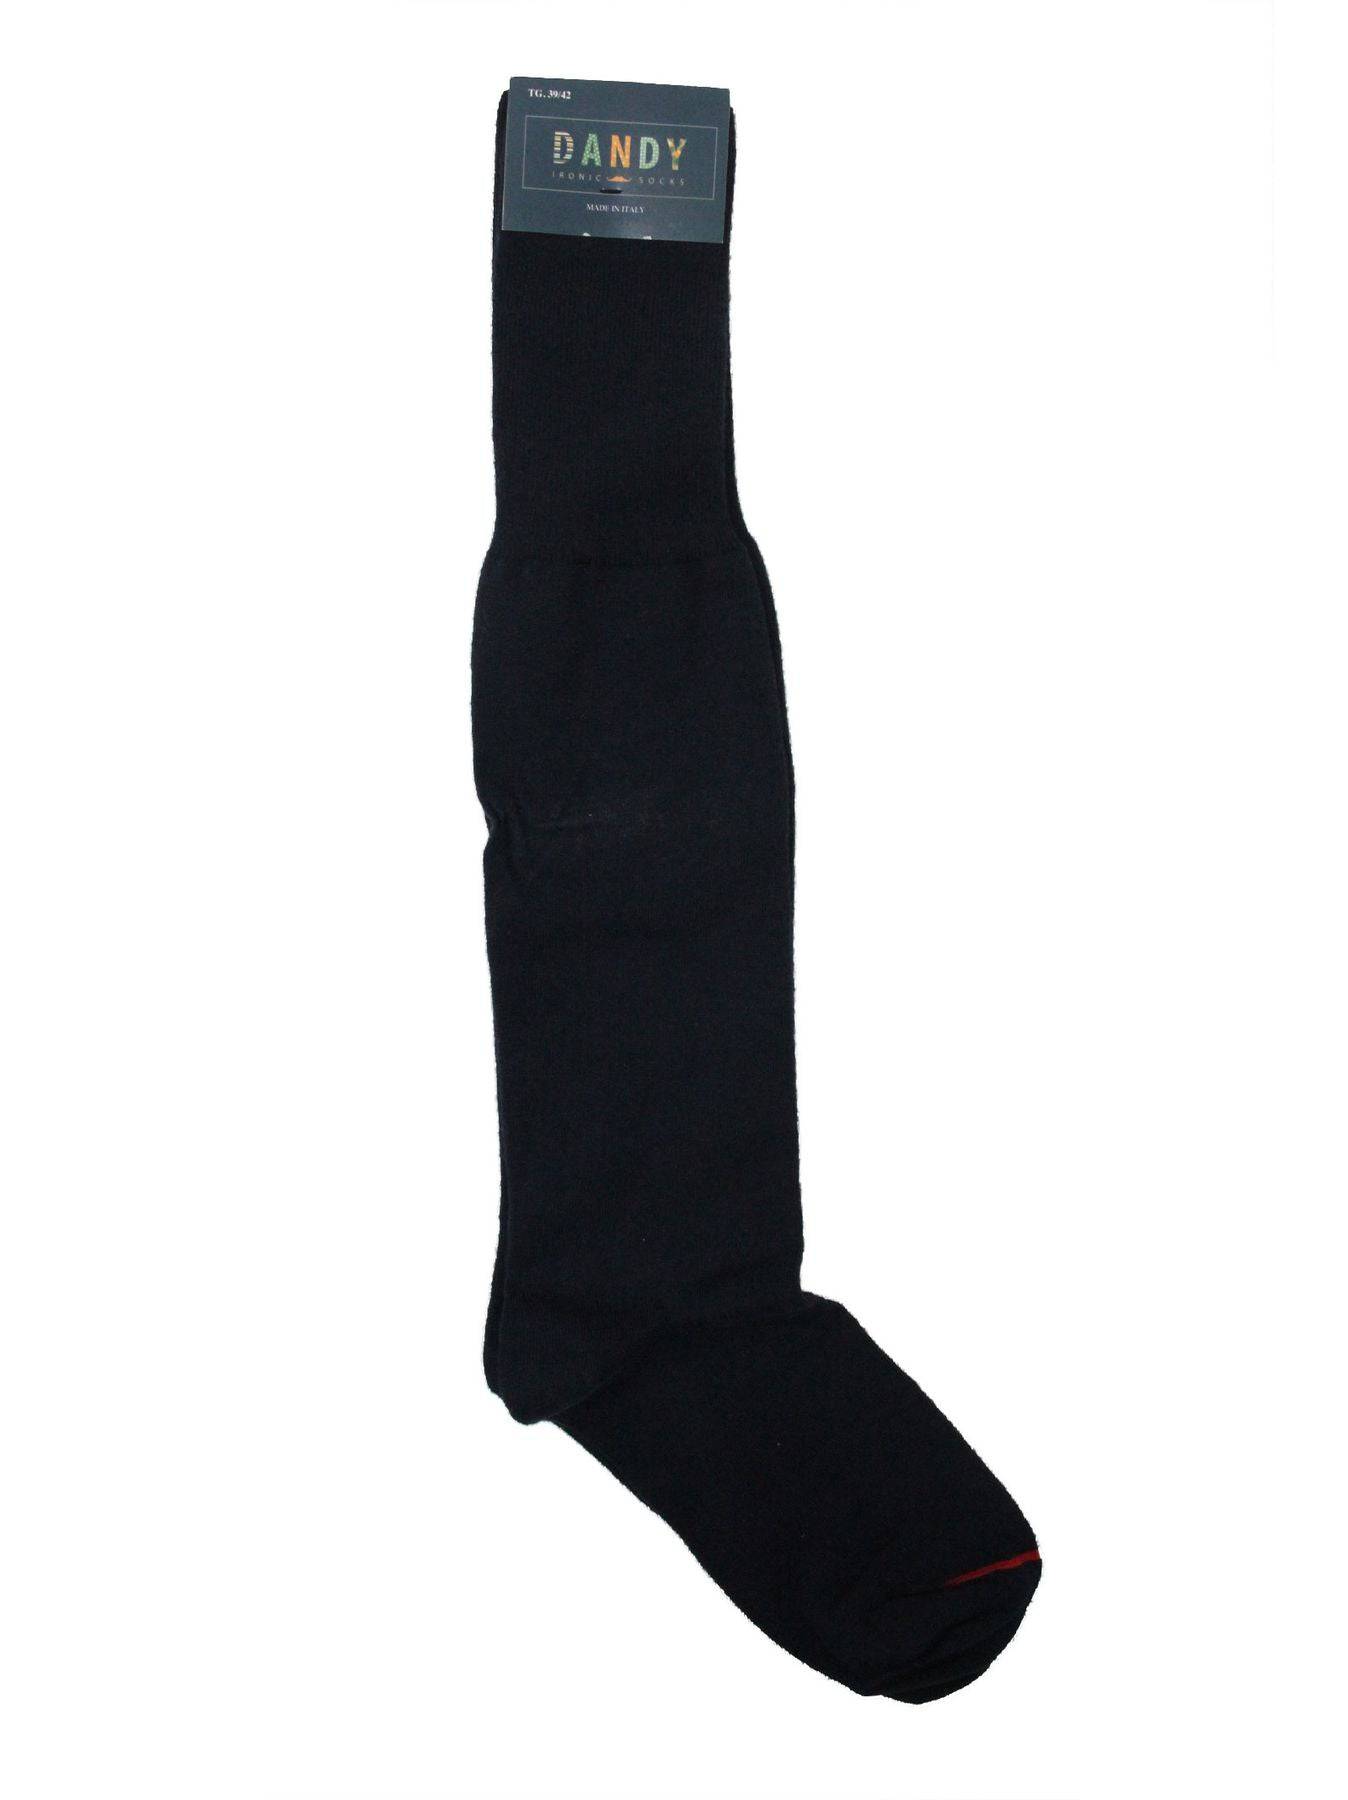 Calze lunghe Uomo 109 CL Dandy Ironic Socks evabiancheria